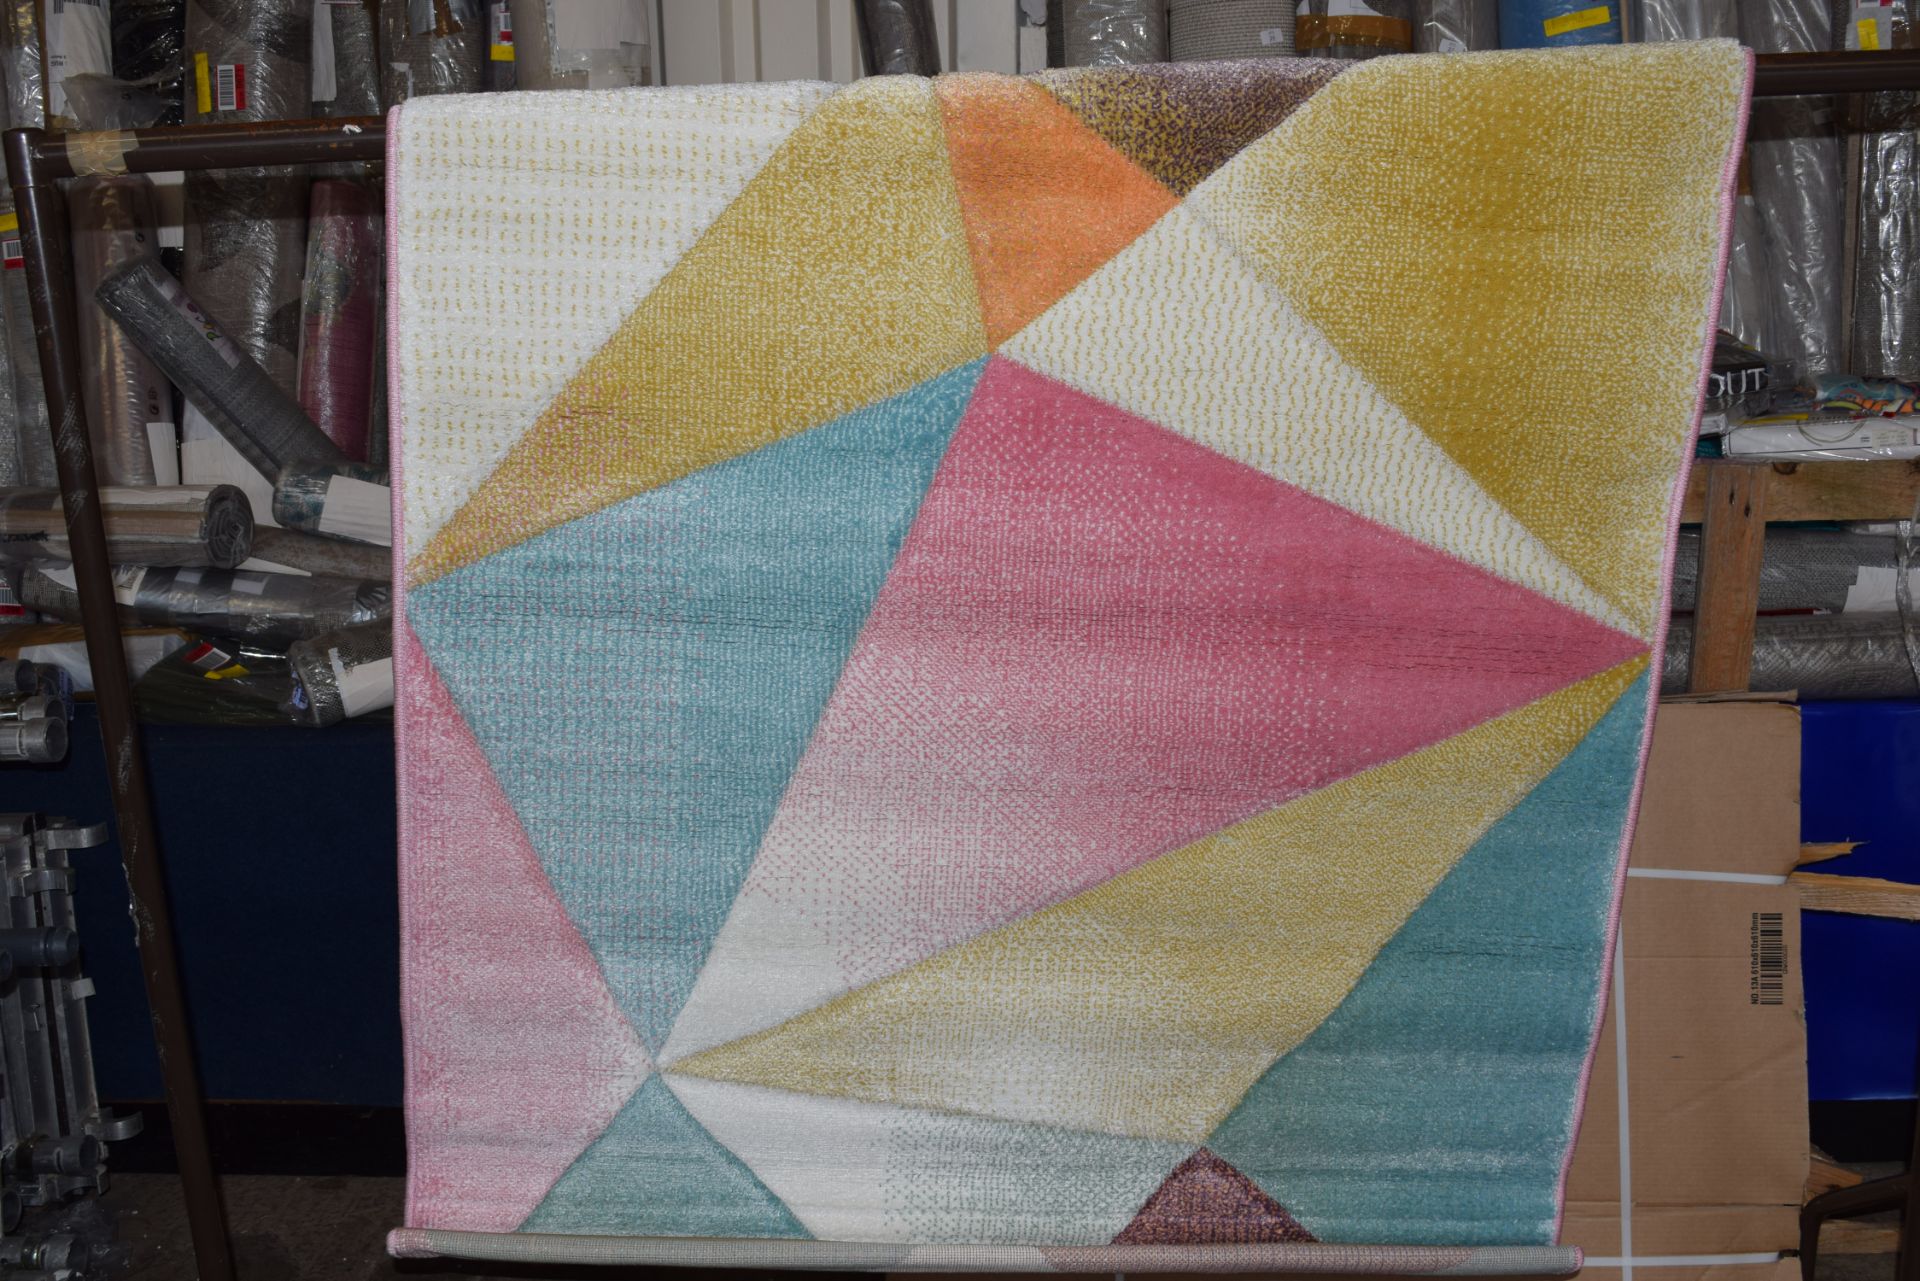 Kosy design rug, 120 x 170cm, multi-coloured - Image 2 of 2